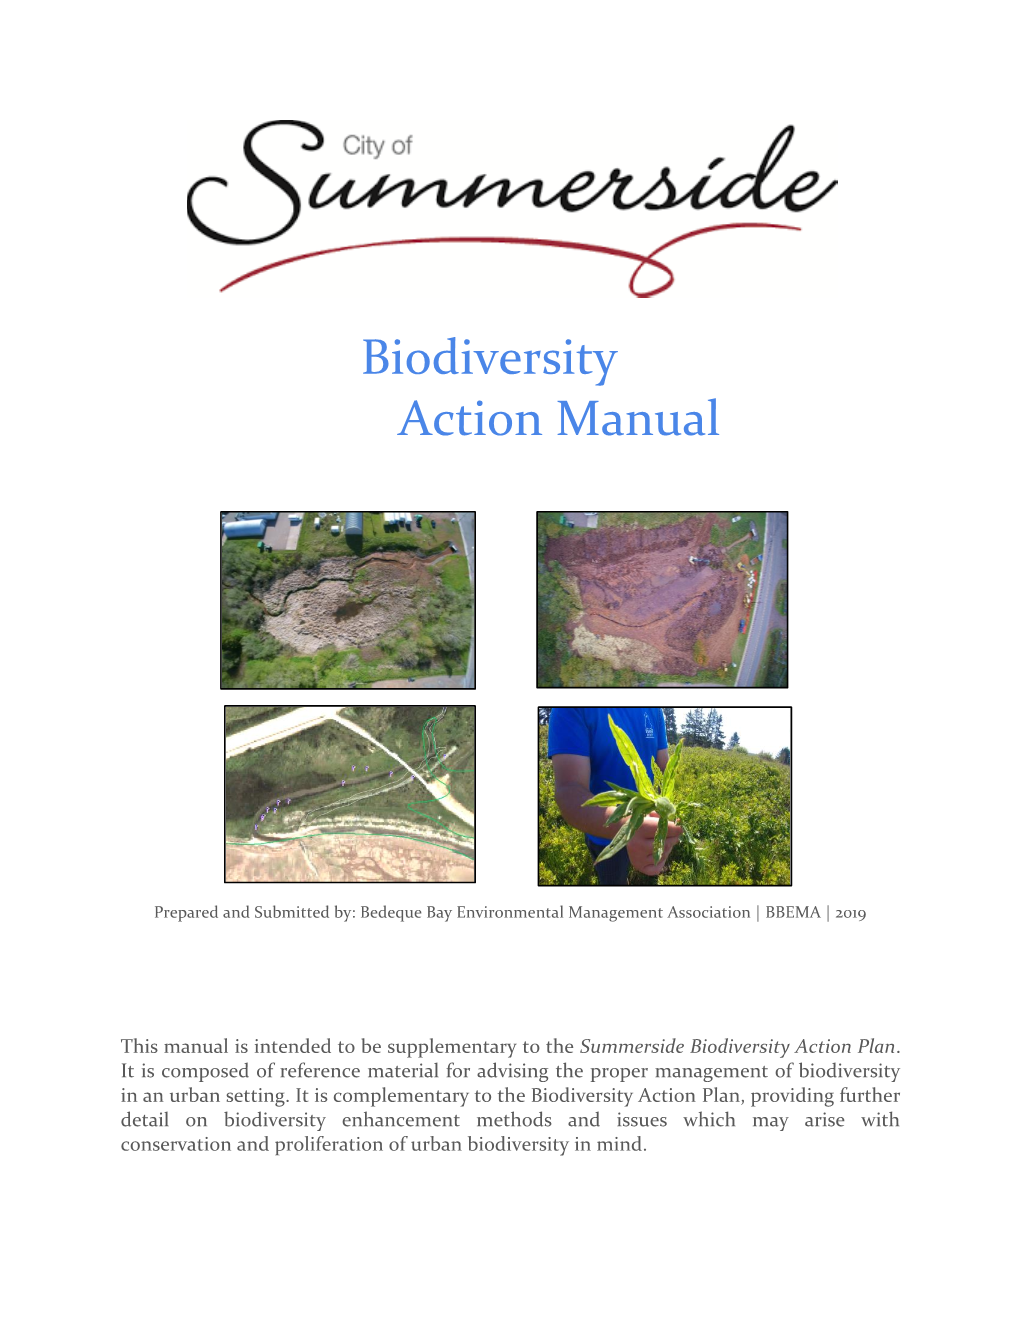 Summerside Biodiversity Action Manual.Docx